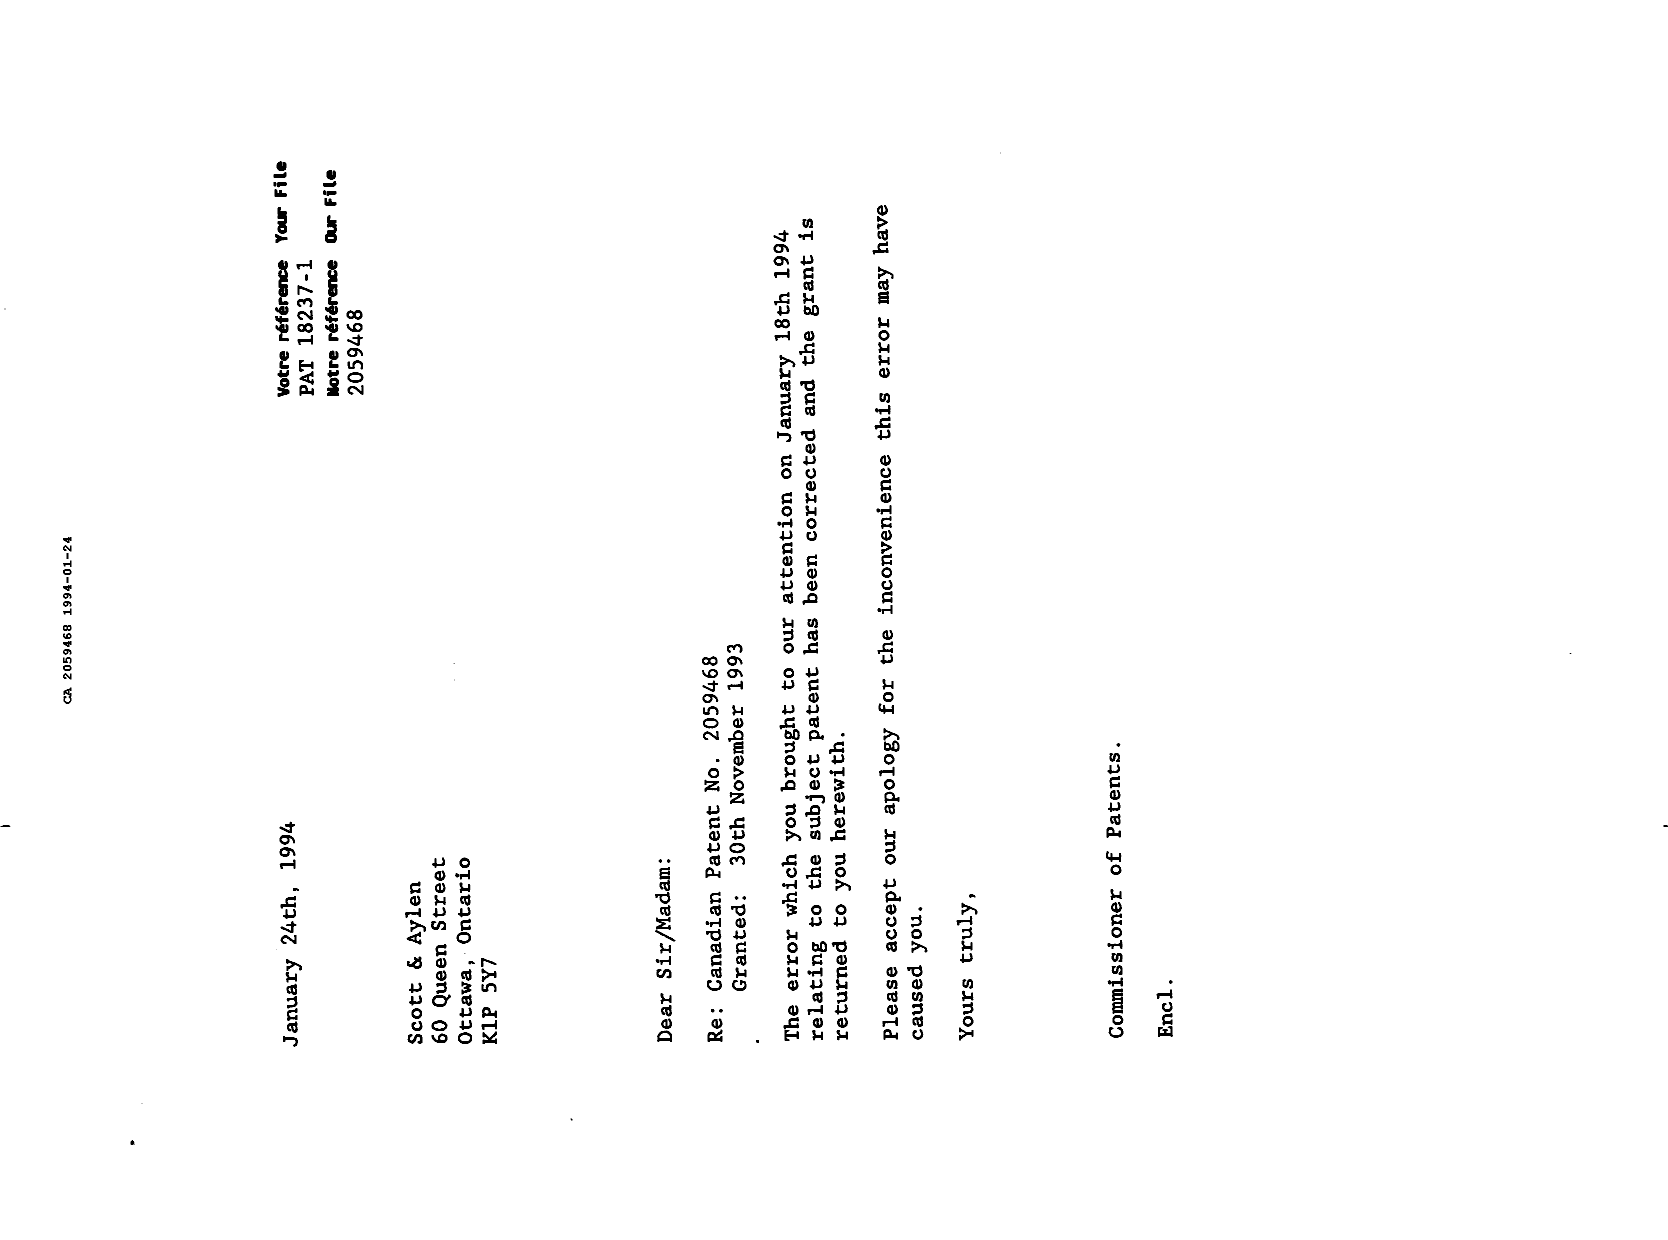 Canadian Patent Document 2059468. Correspondence 19931224. Image 1 of 1